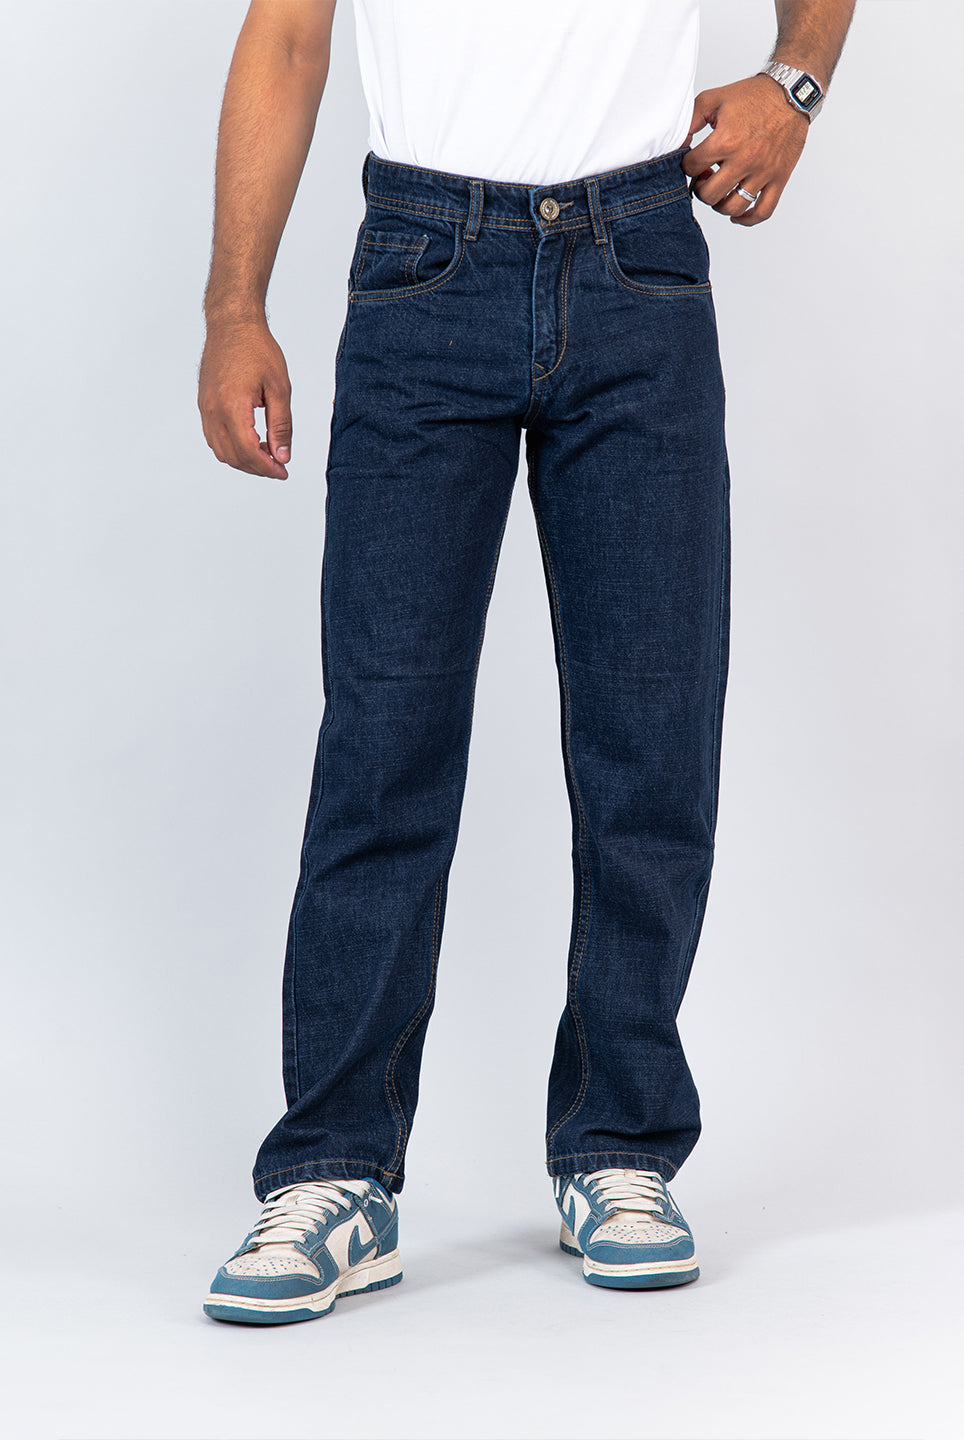 dark blue straight fit mens jeans